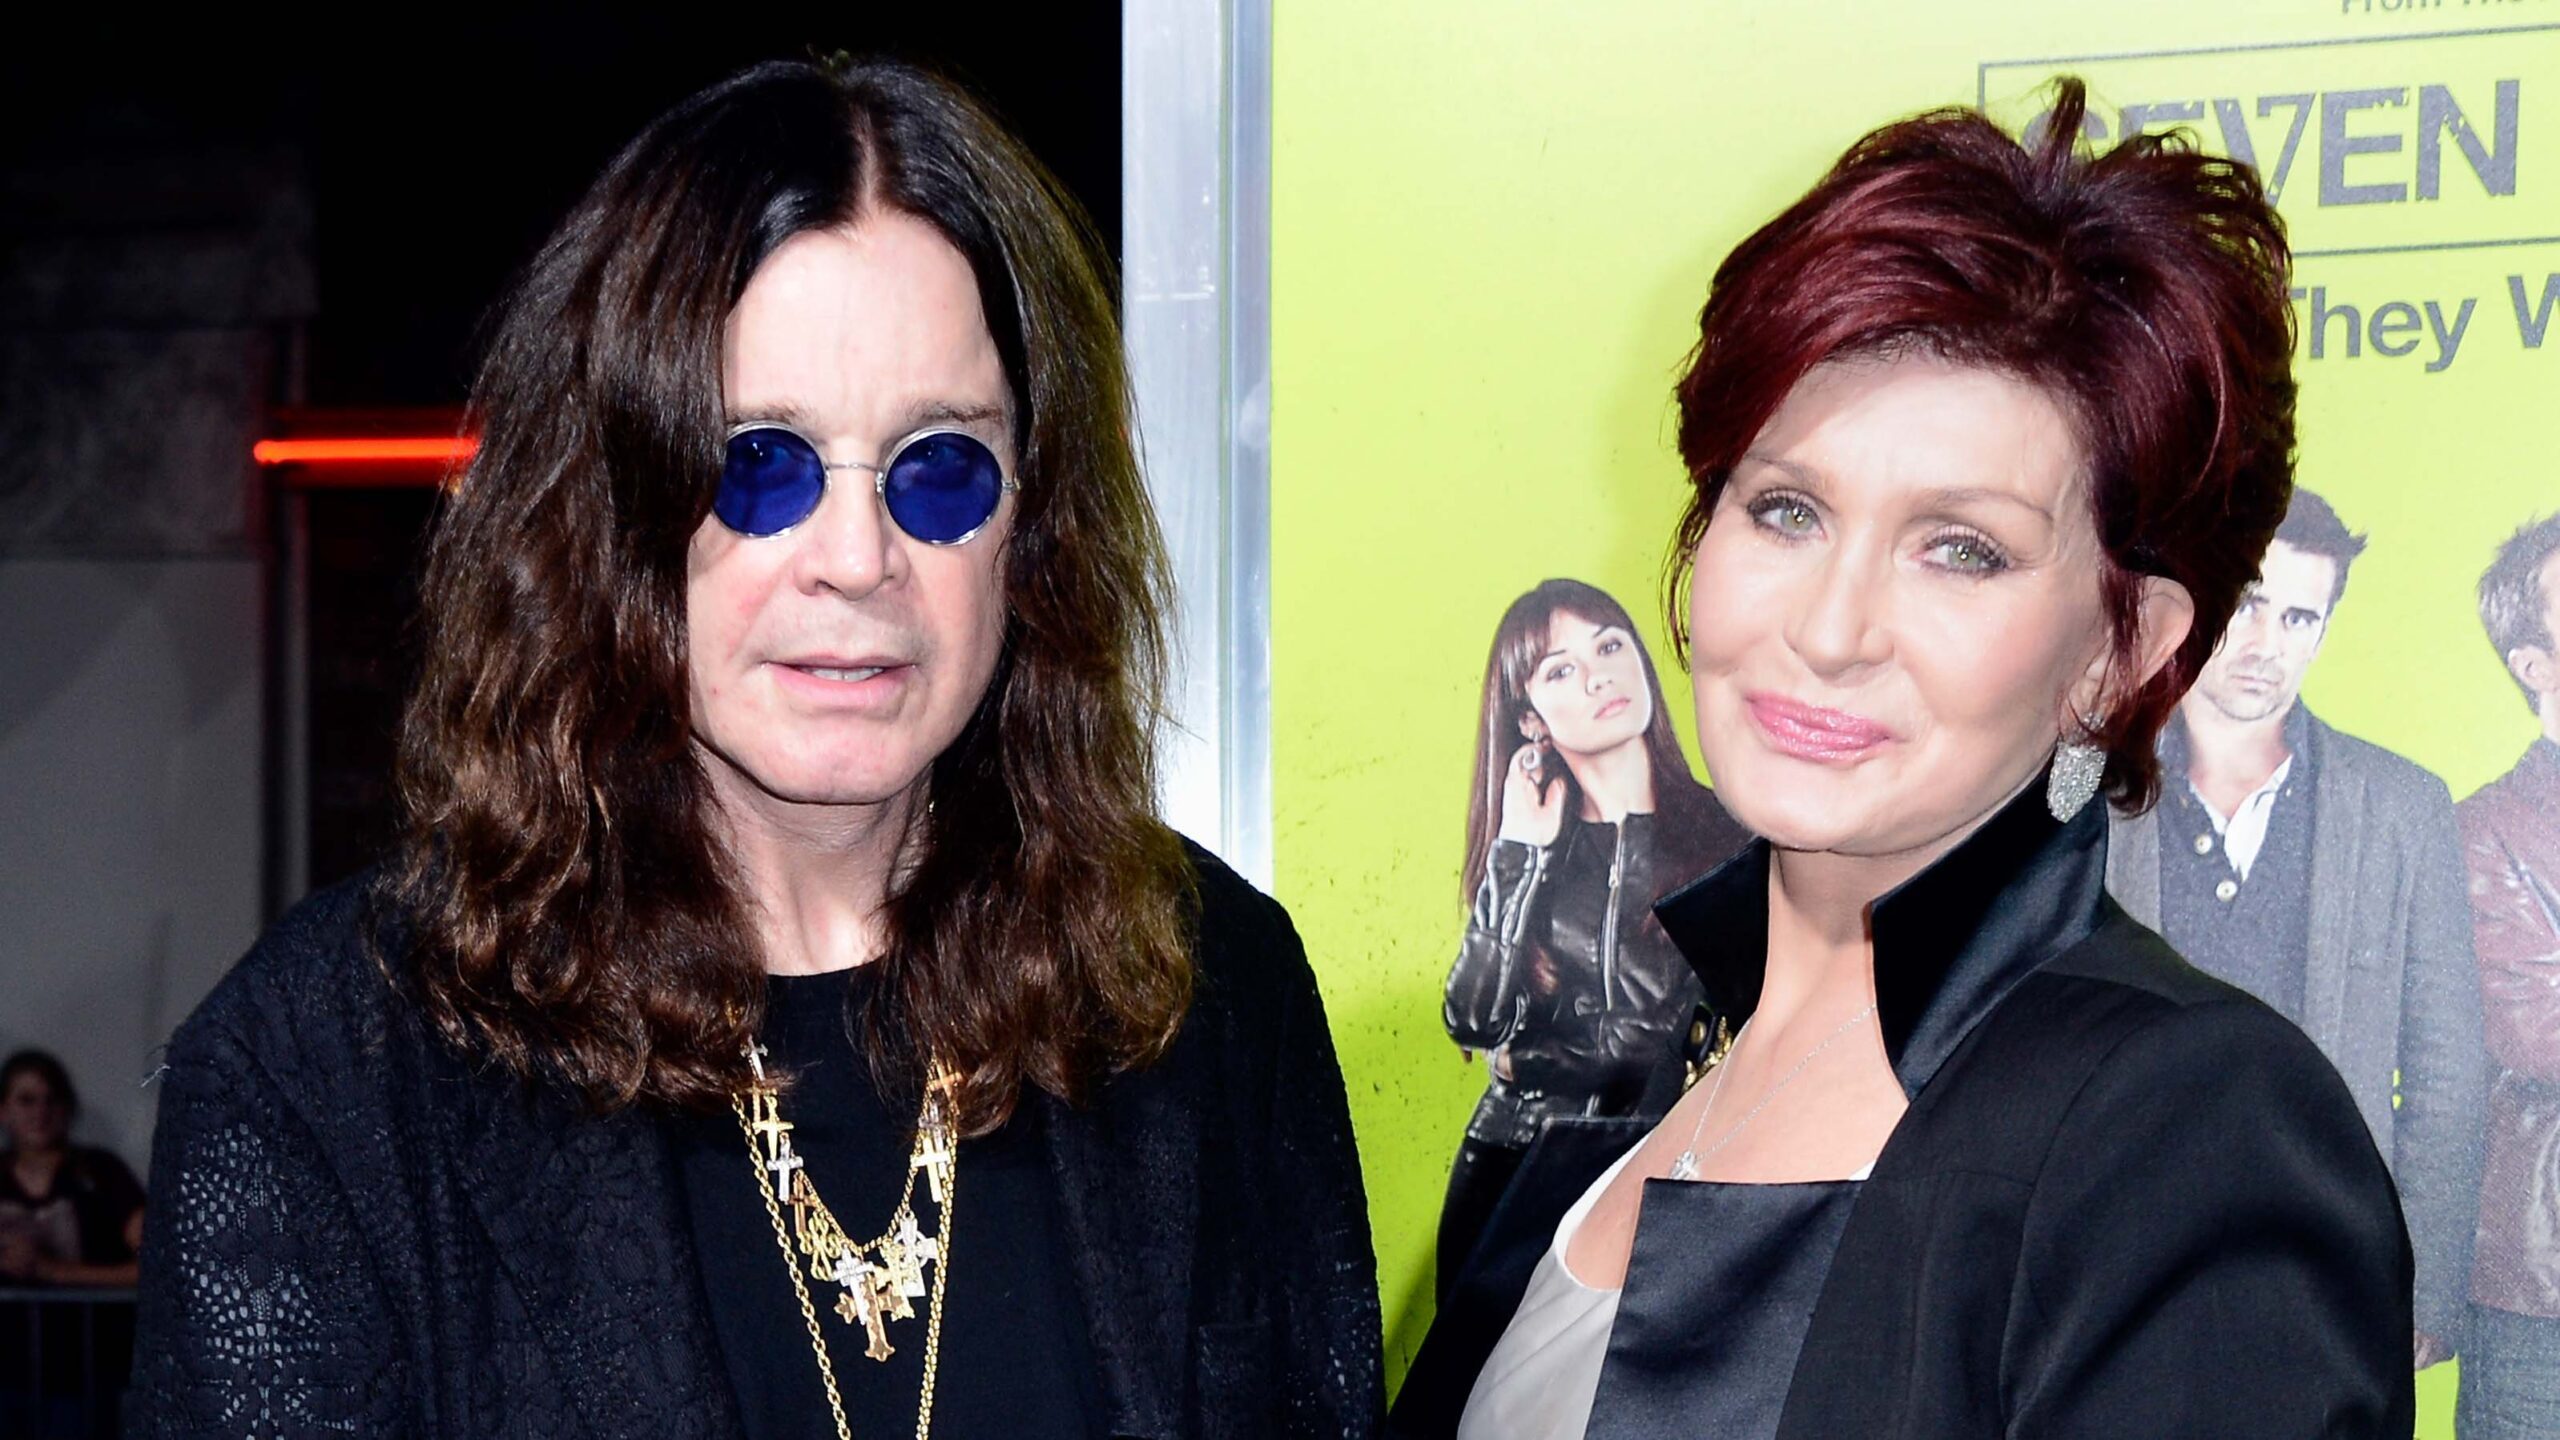 Sharon Osbourne confirms Ozzy split, looks to new chapter